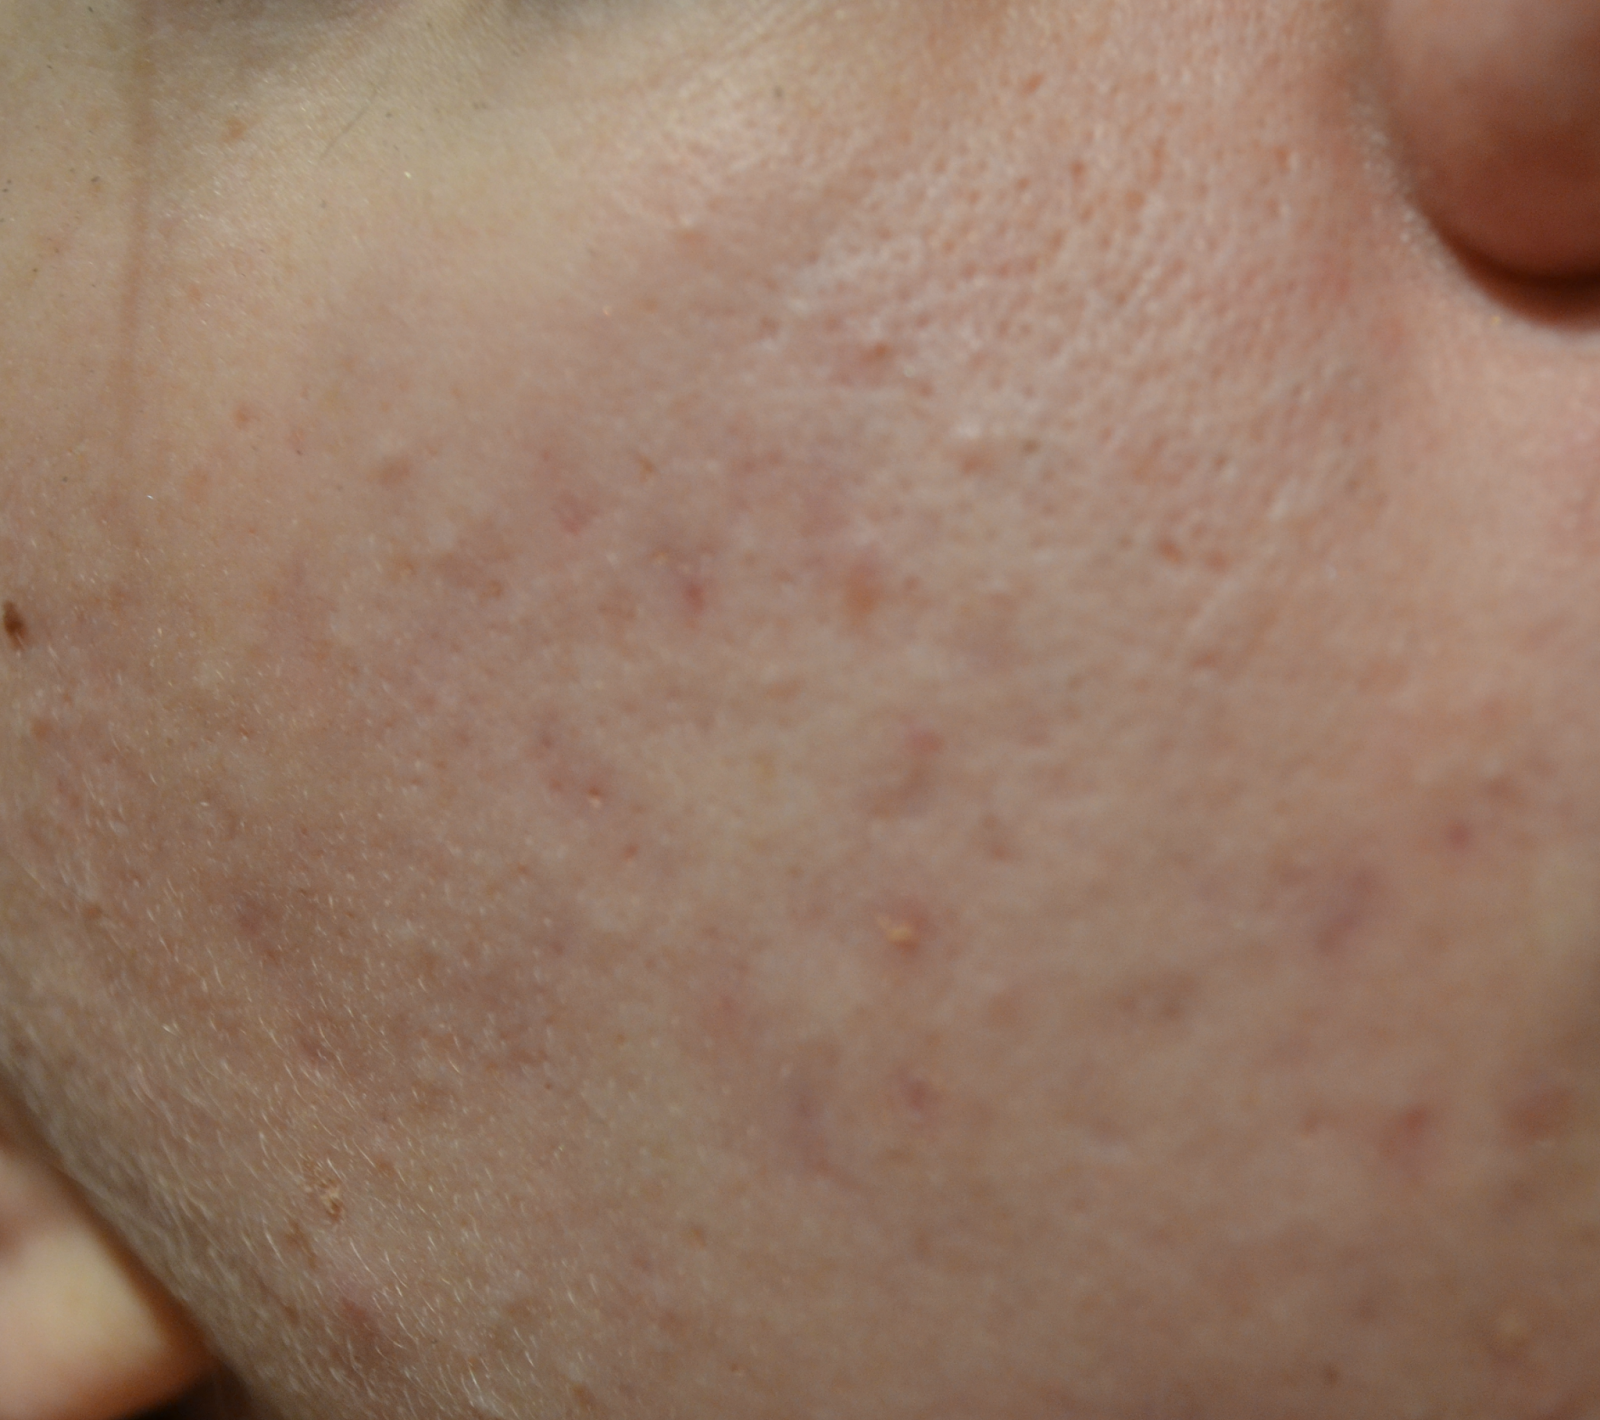 mild-acne